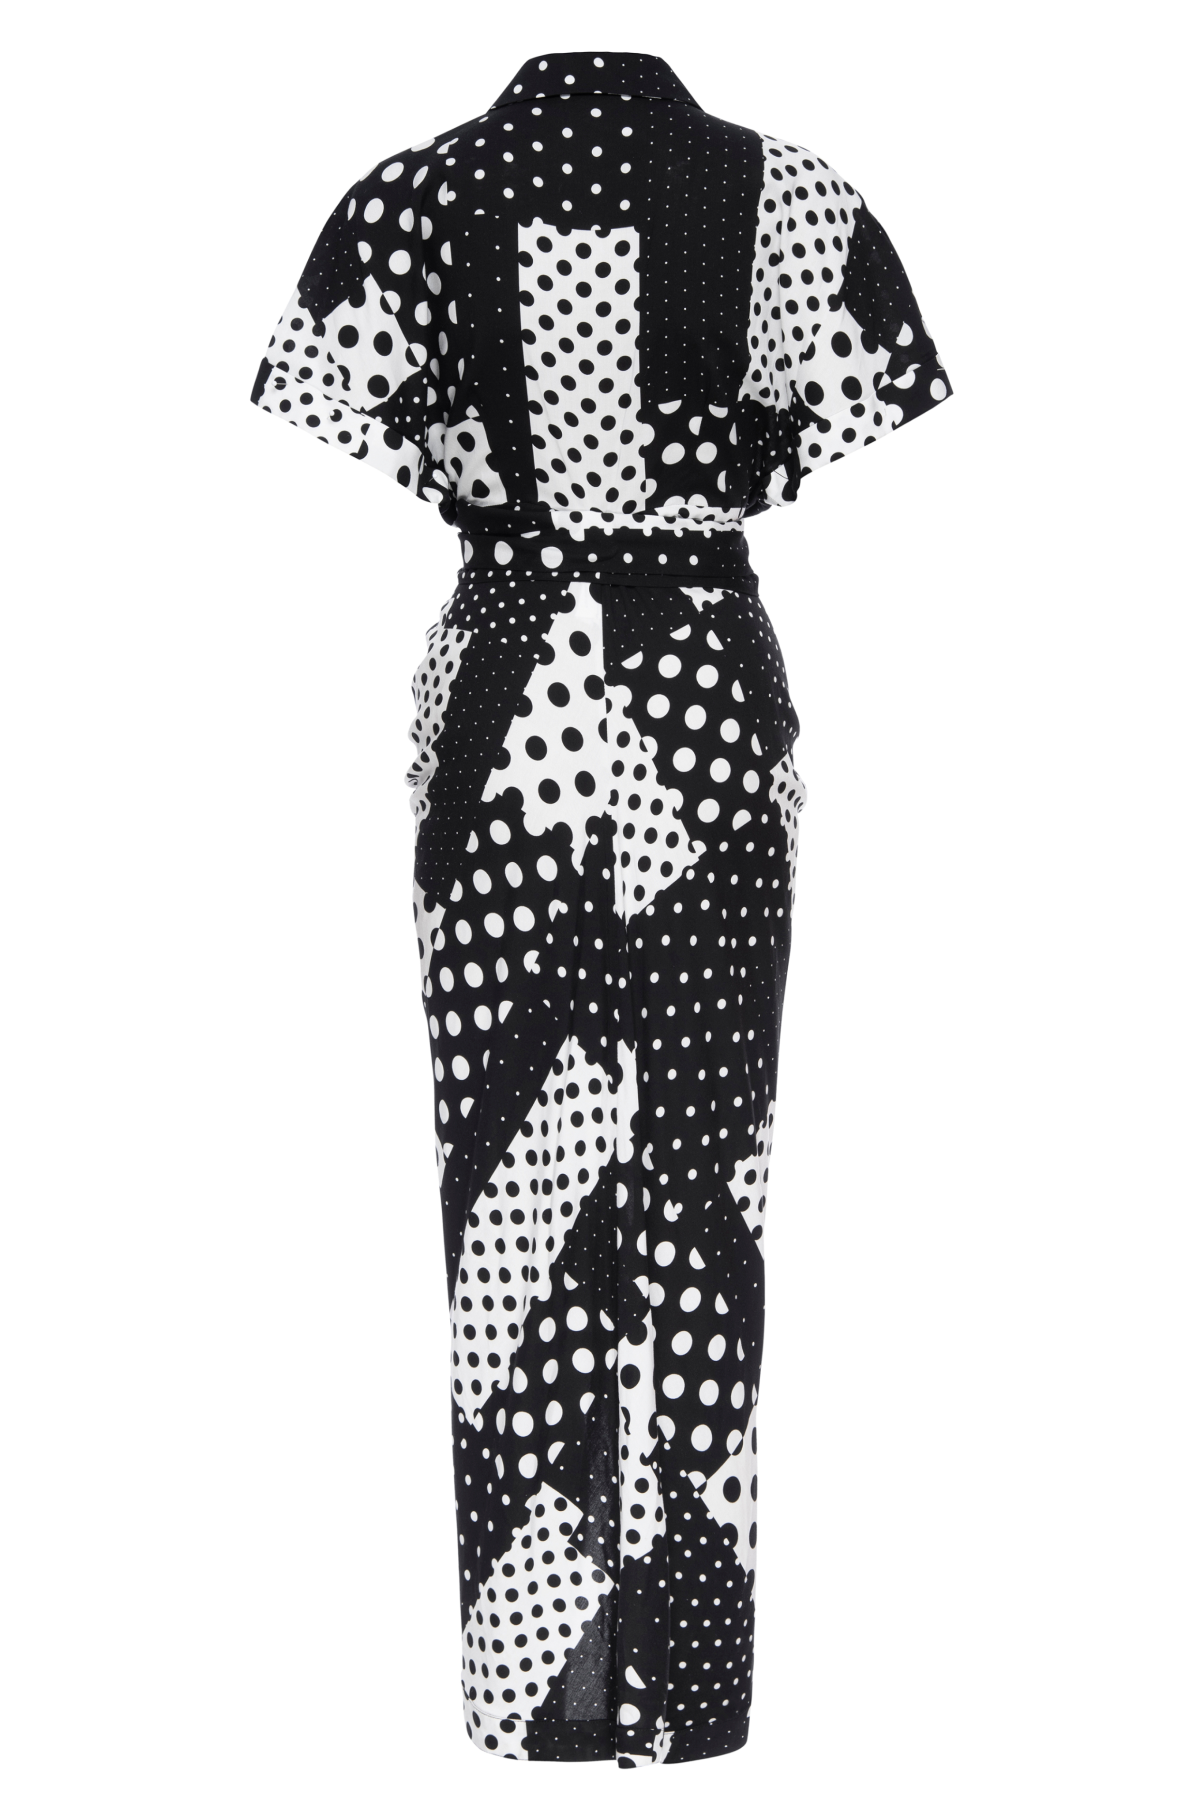 Le Superbe Super Dot Collage Miko Dress